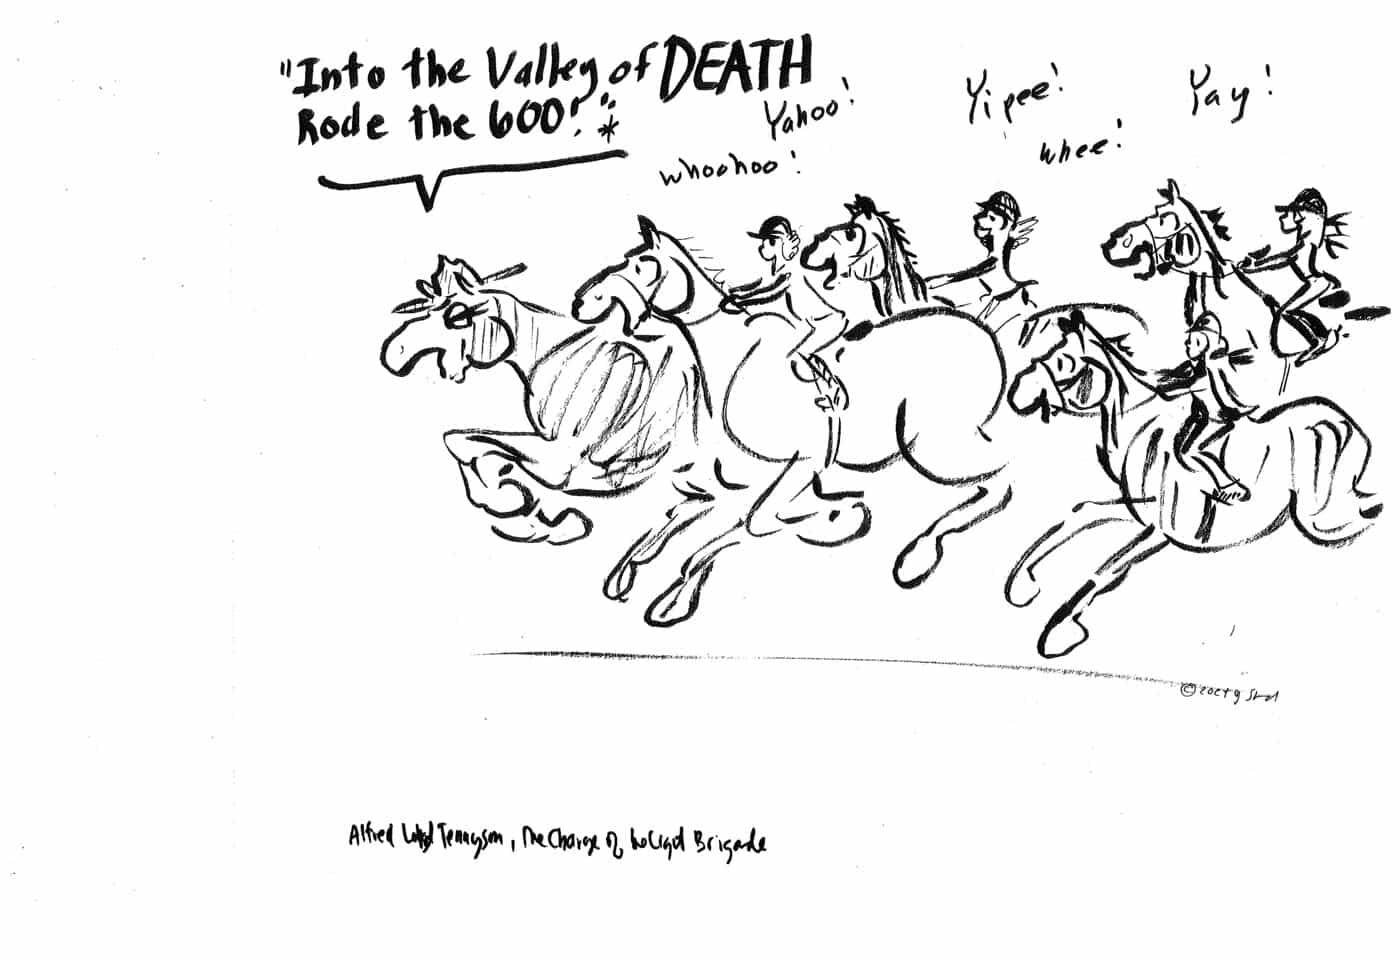 Happy Valley Riding School cartoon thumbnail